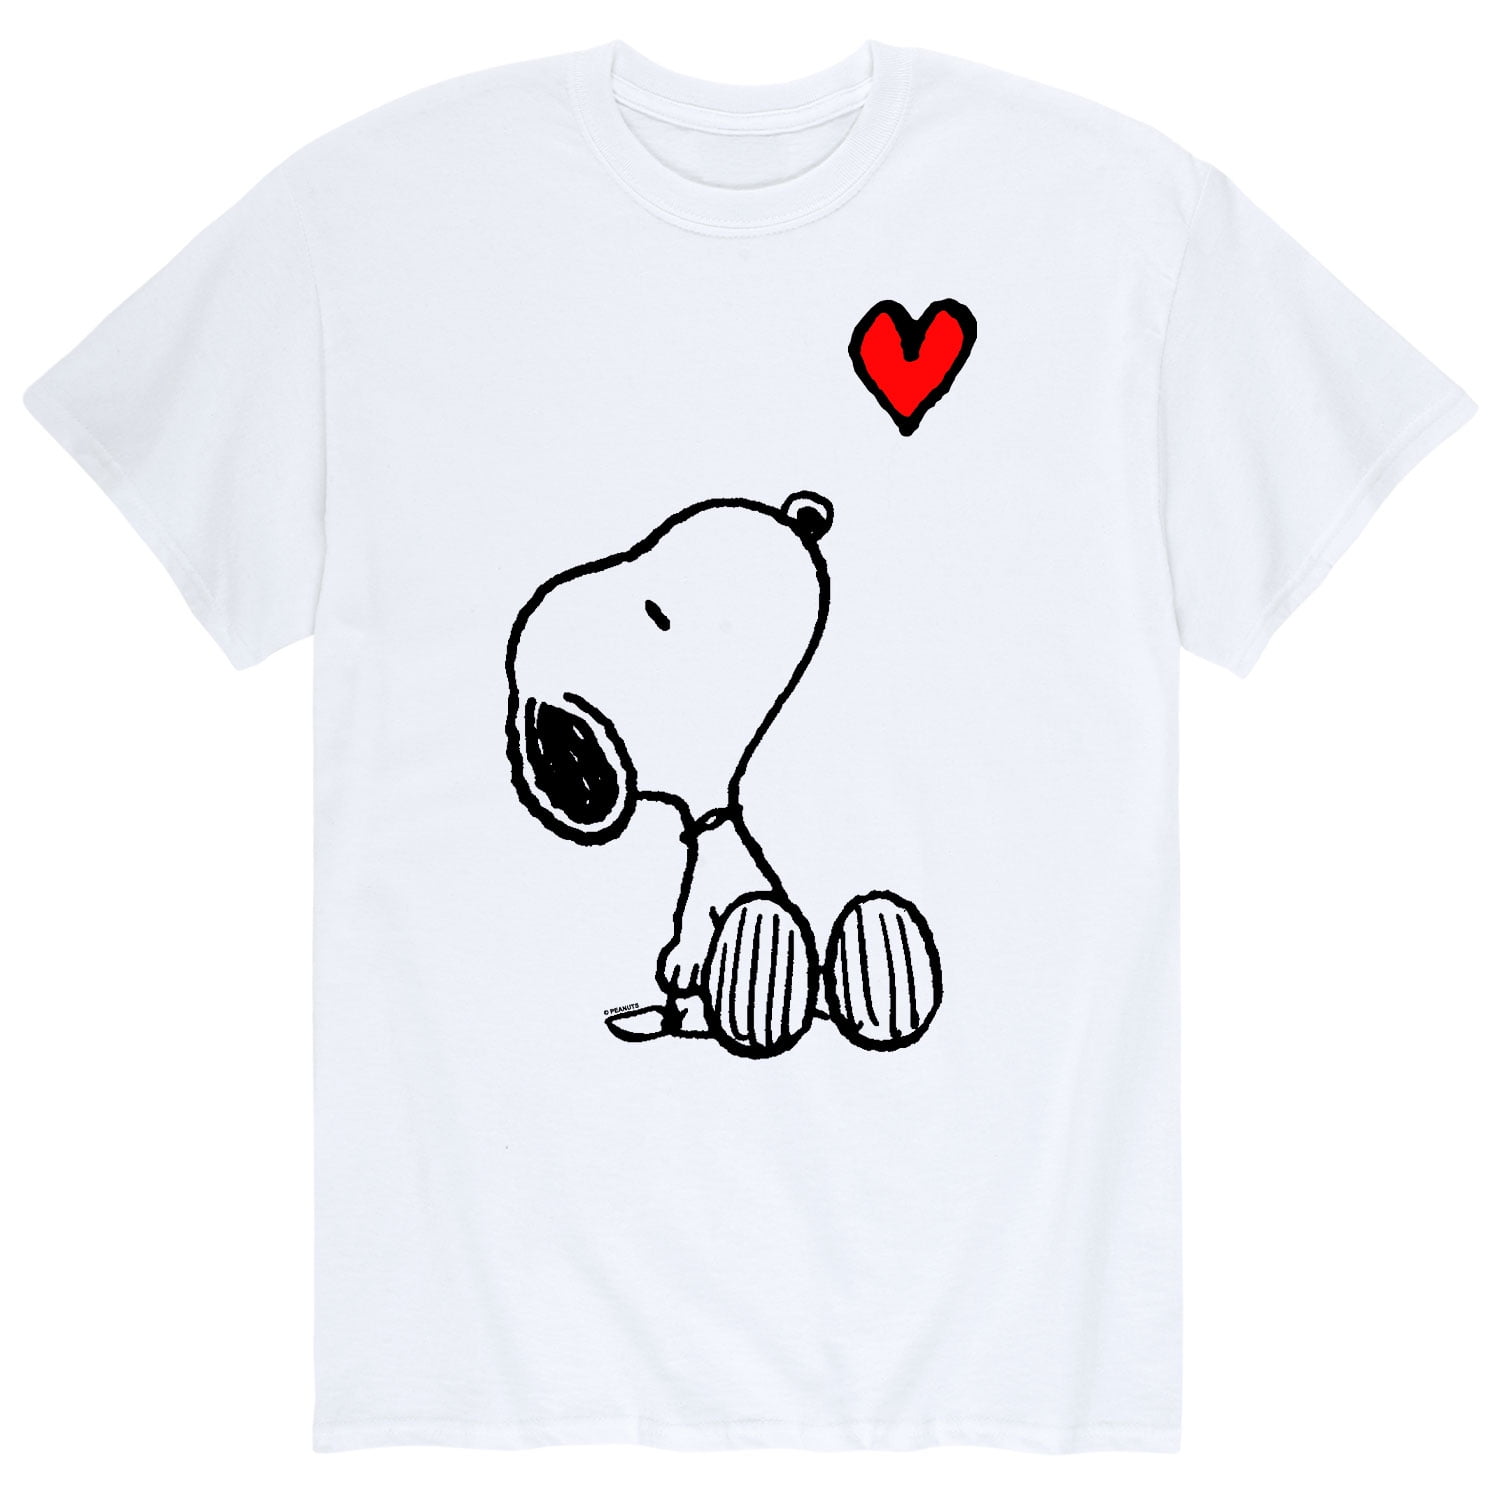 Peanuts - Snoopy Heart - Men's Short Sleeve Graphic T-Shirt - Walmart.com